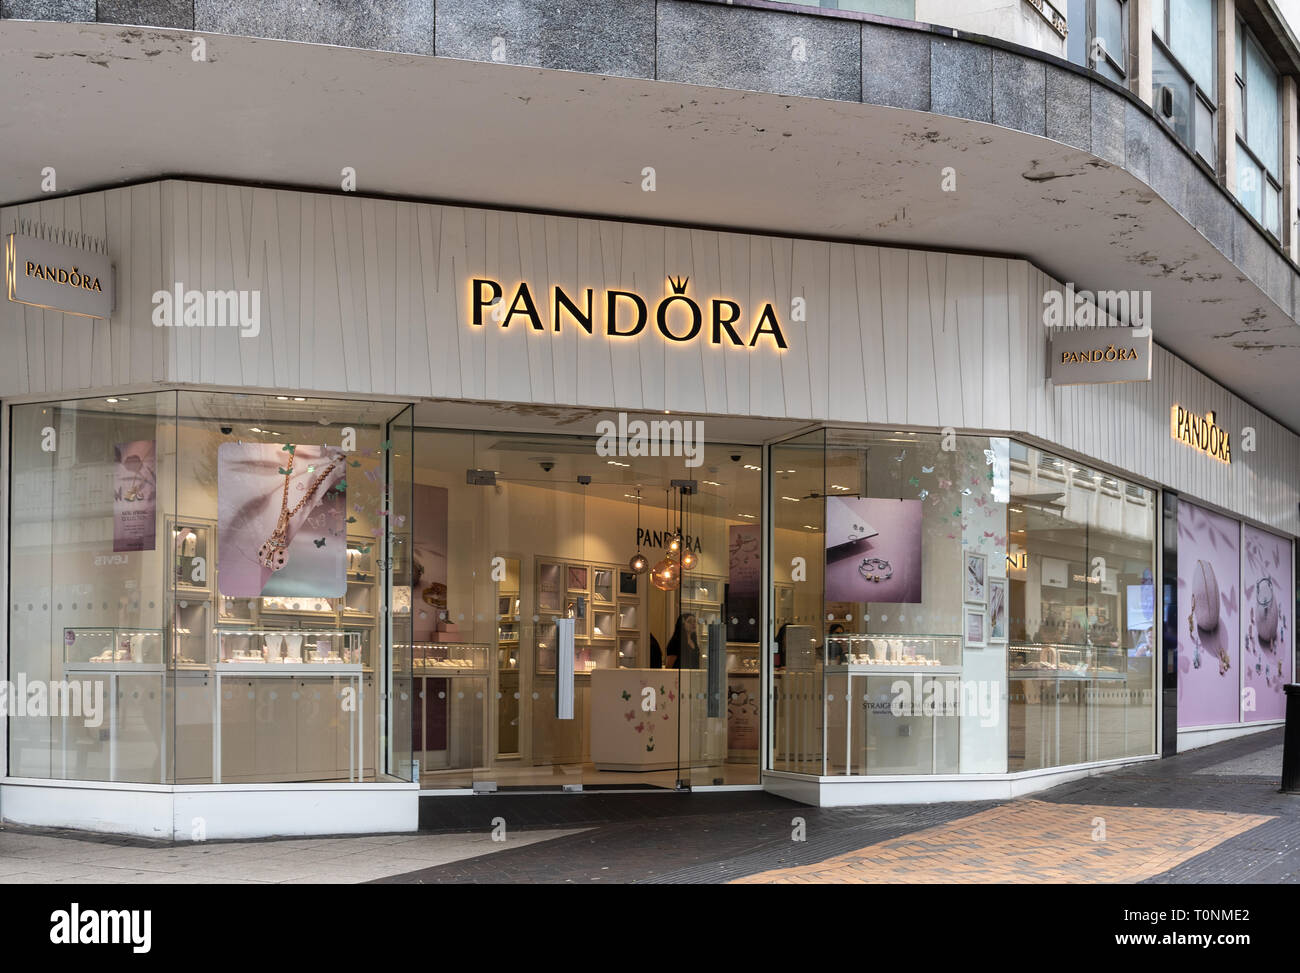 Pandora shop front hi-res stock photography and images - Alamy